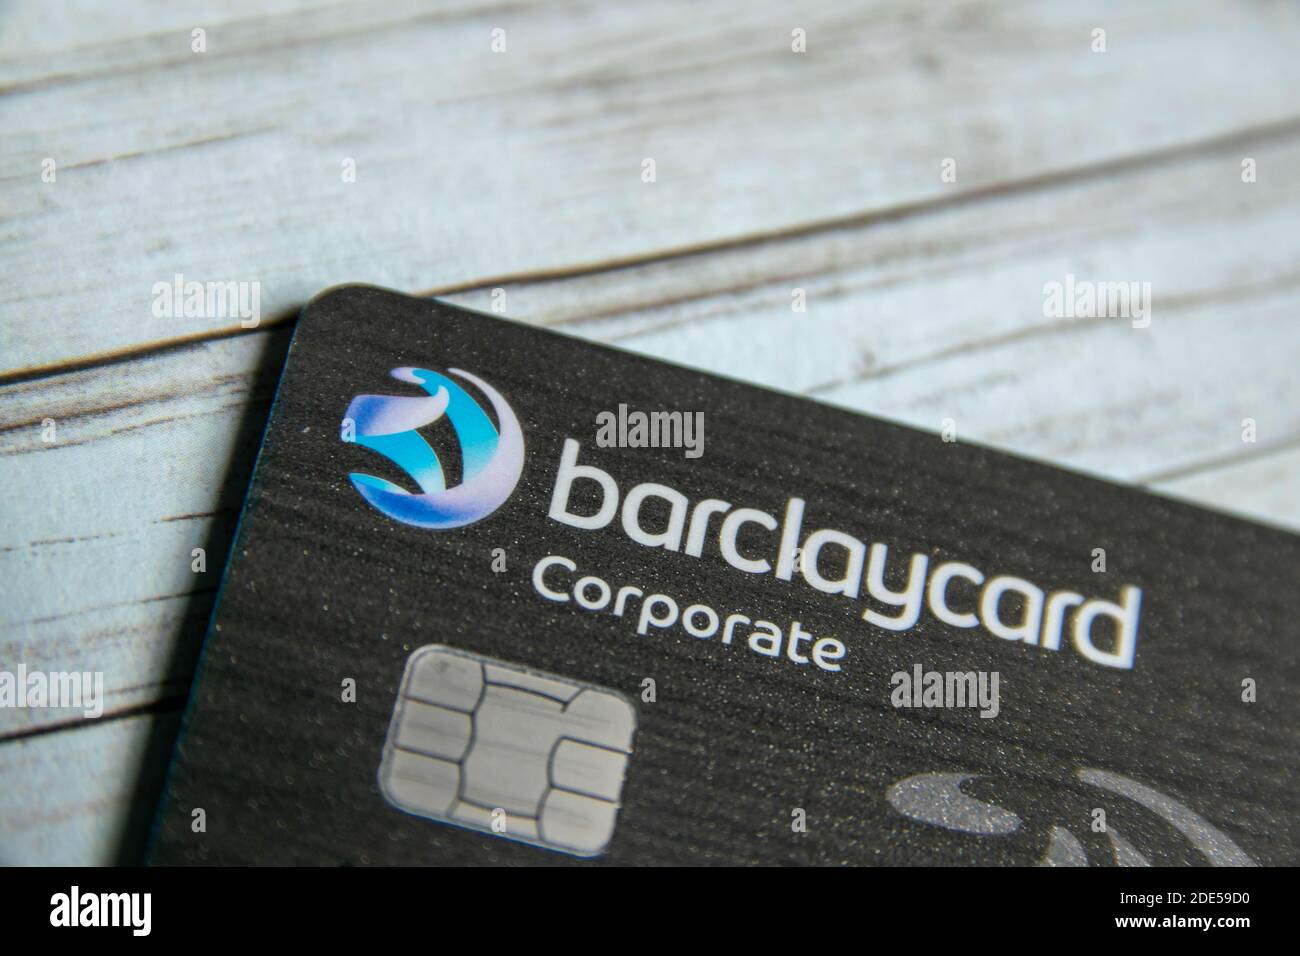 Barclays konto -Fotos und -Bildmaterial in hoher Auflösung – Alamy